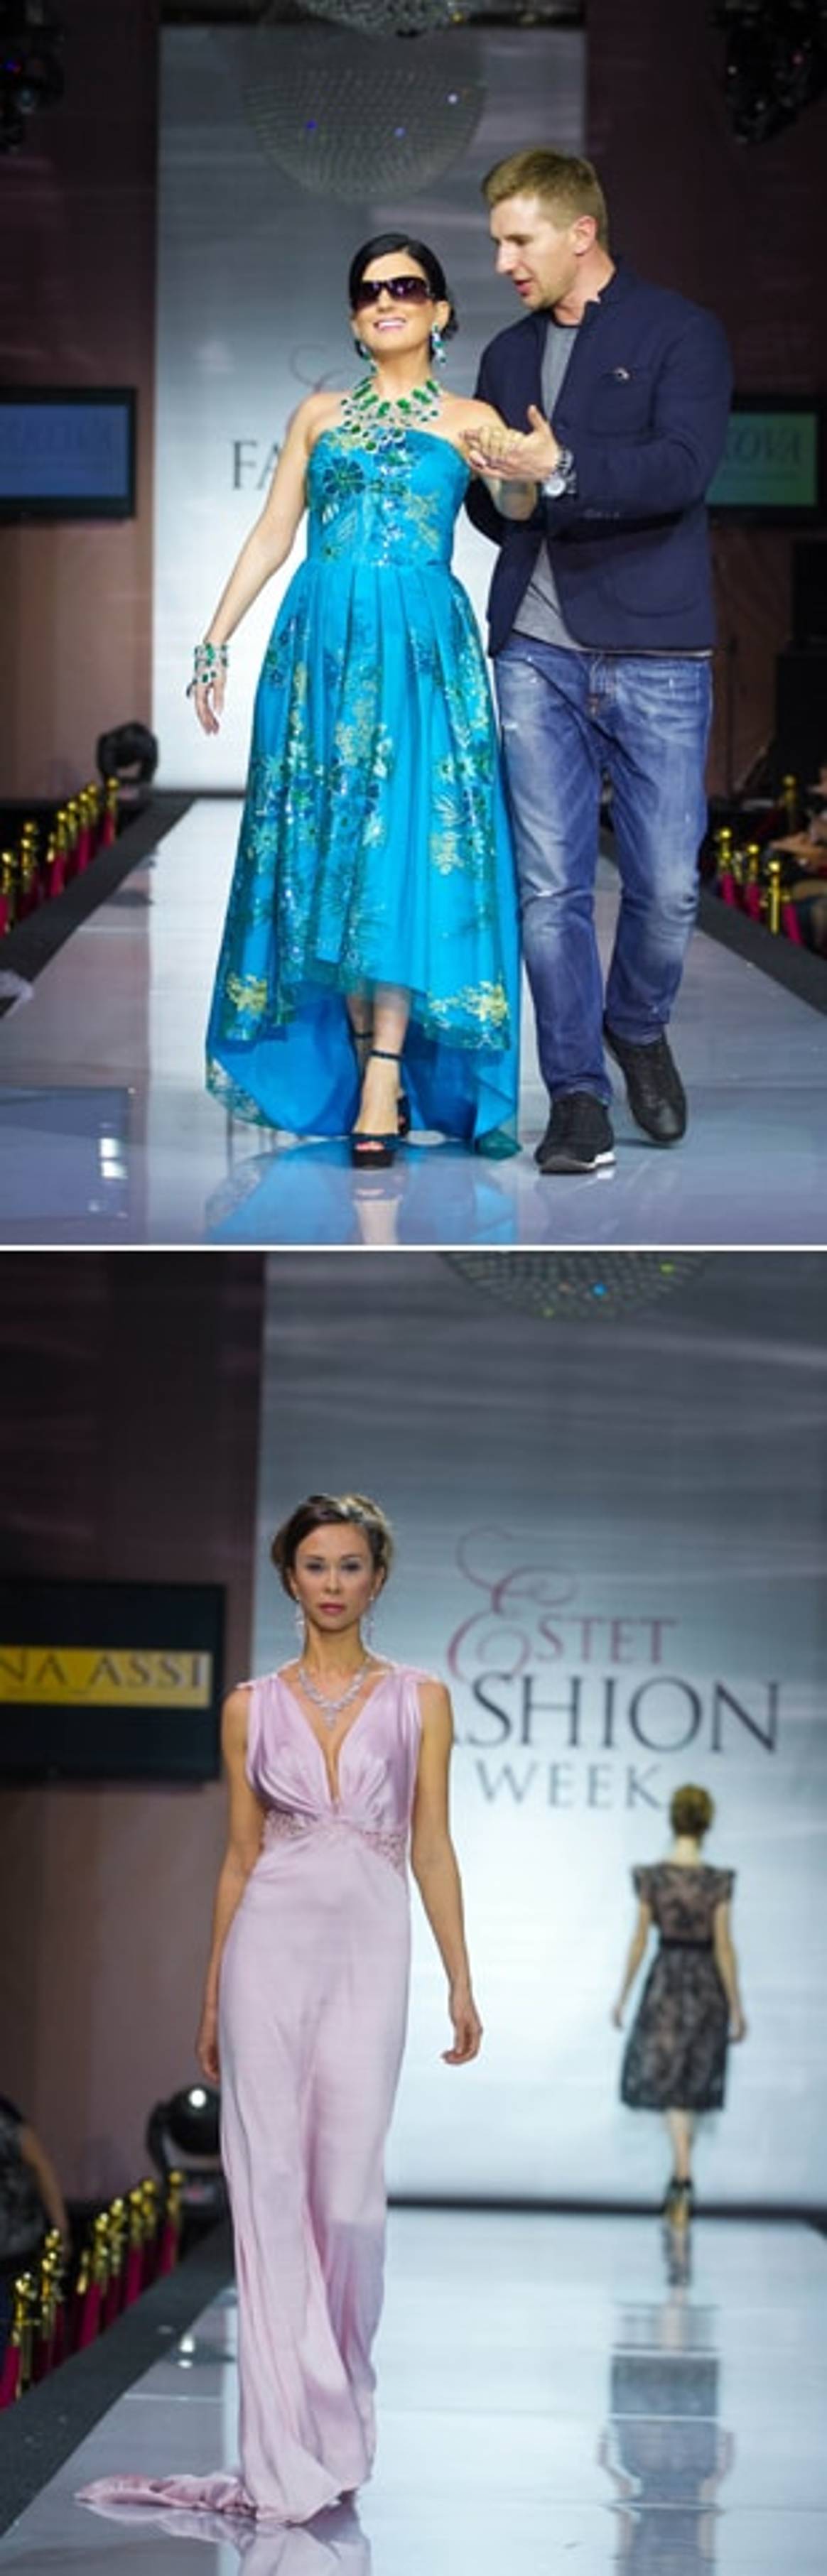 Estet Fashion Week  опережает Канны